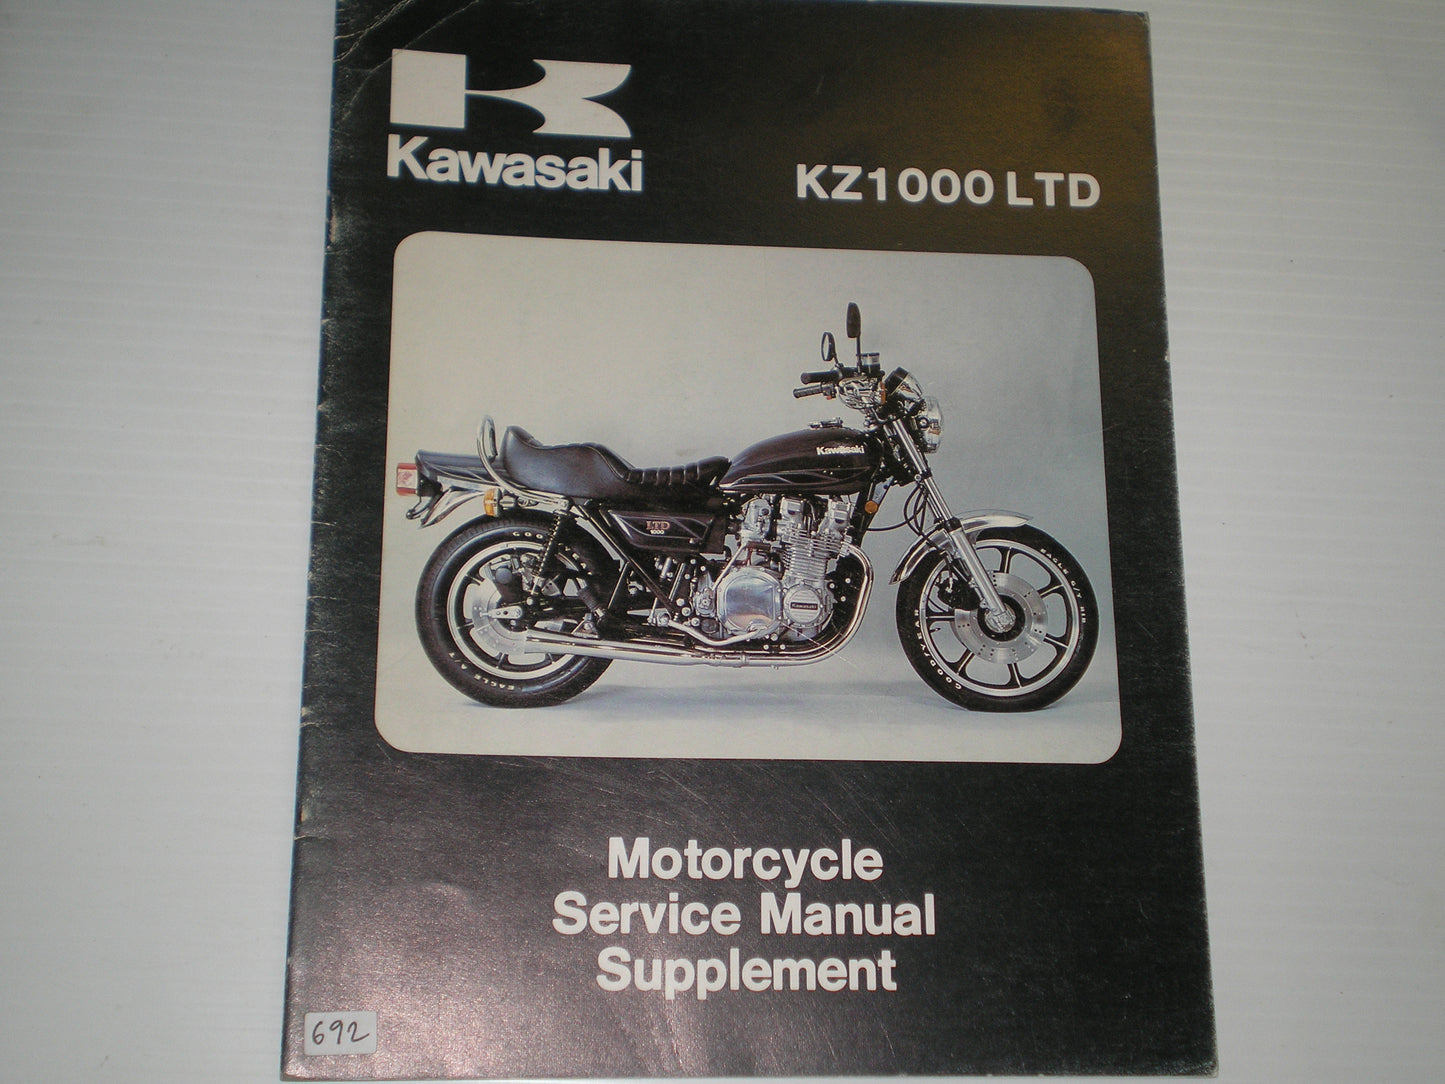 KAWASAKI KZ1000 B4 LTD 1980  Service Supplement Manual  99963-0034-01  #692